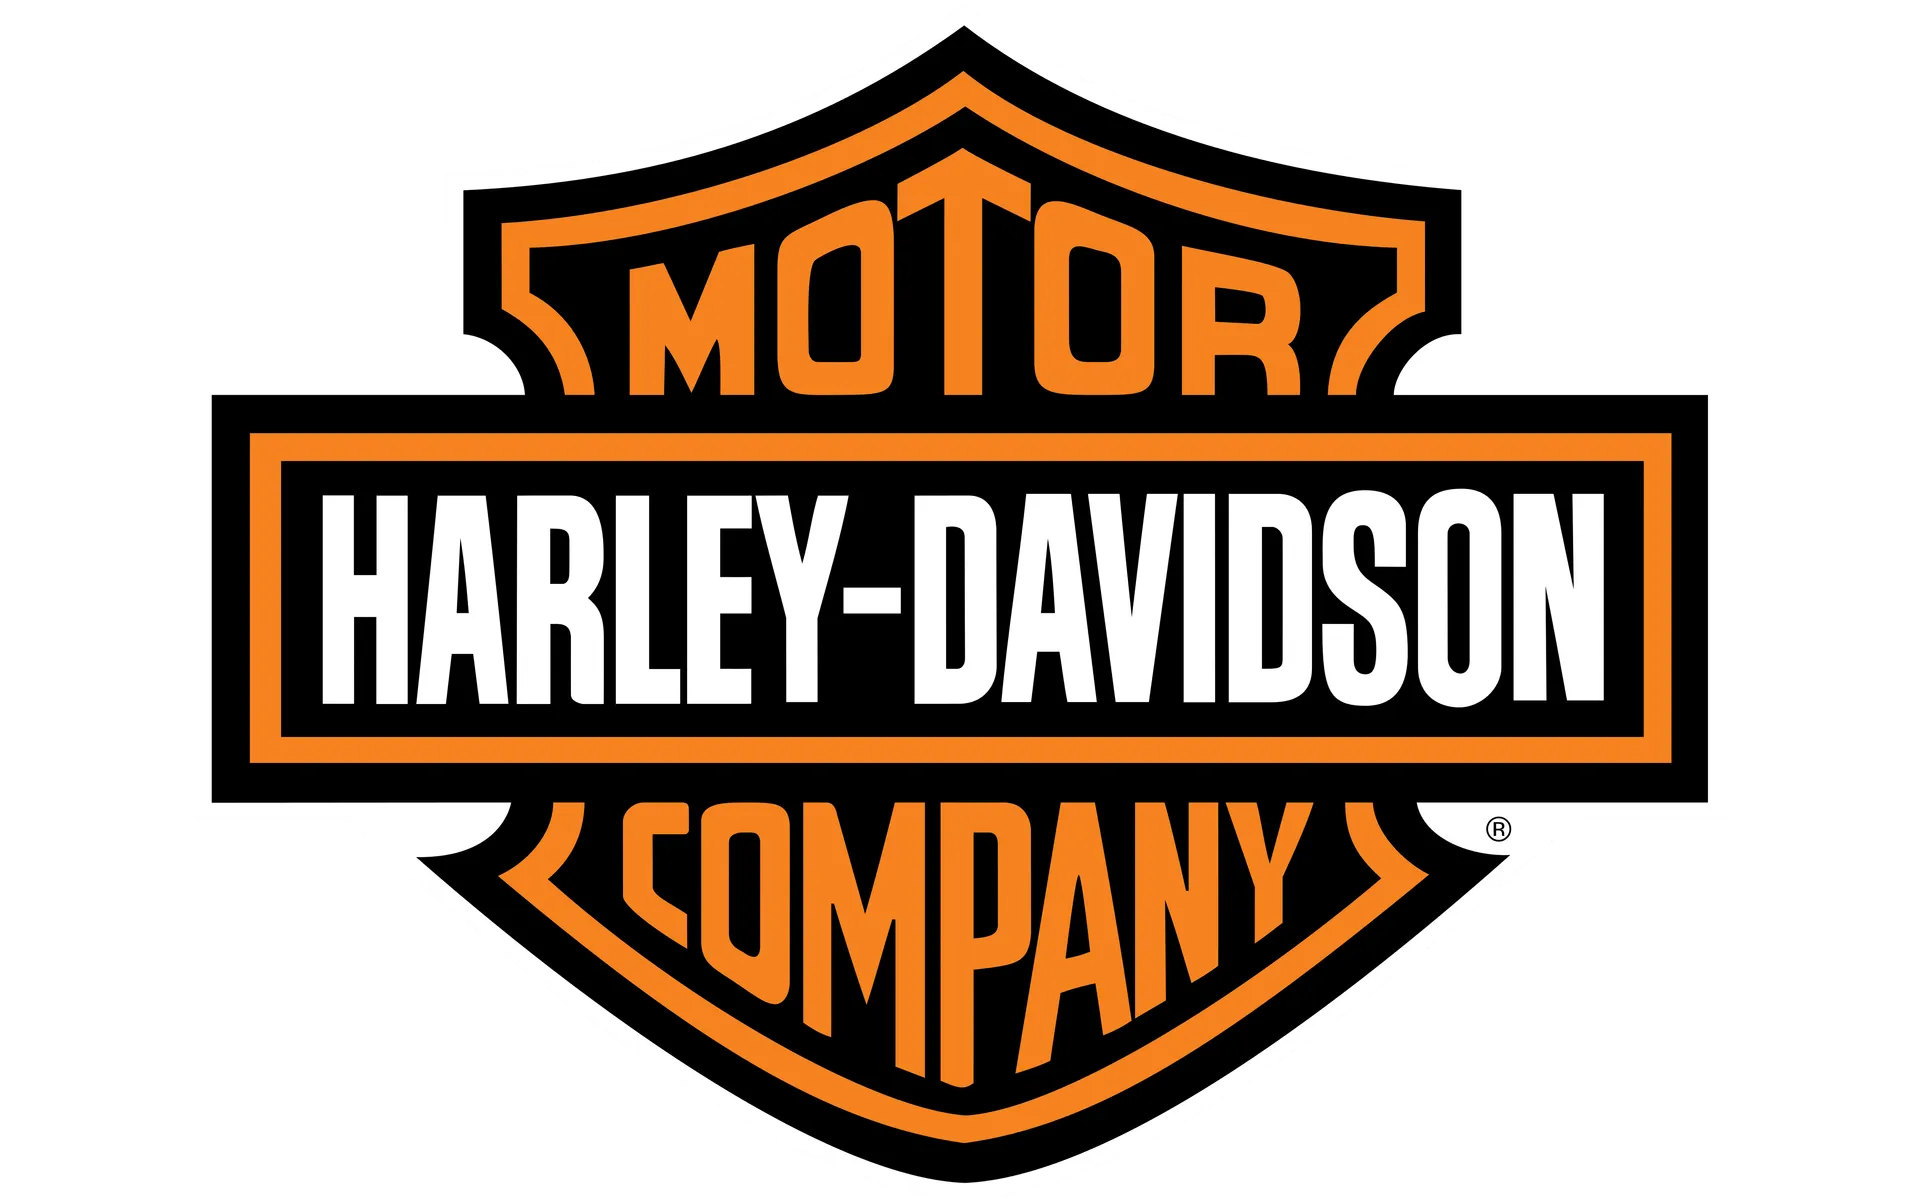 HARLEY DAVIDSON logo. Current weekly ad